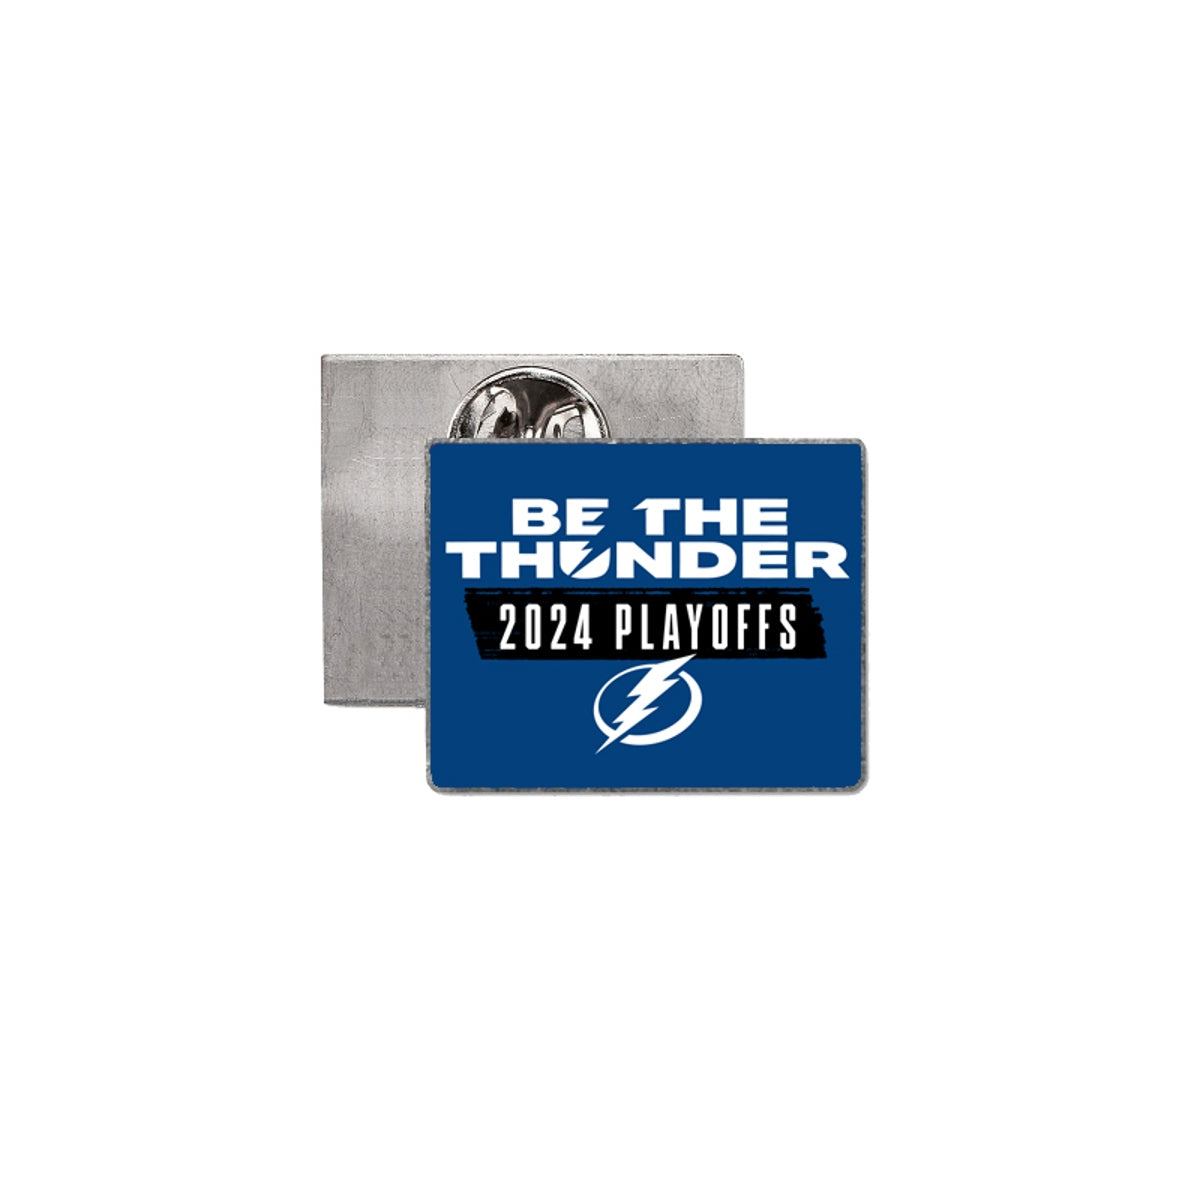 Tampa Bay Lightning 2024 Playoffs Be The Thunder Lapel Pin